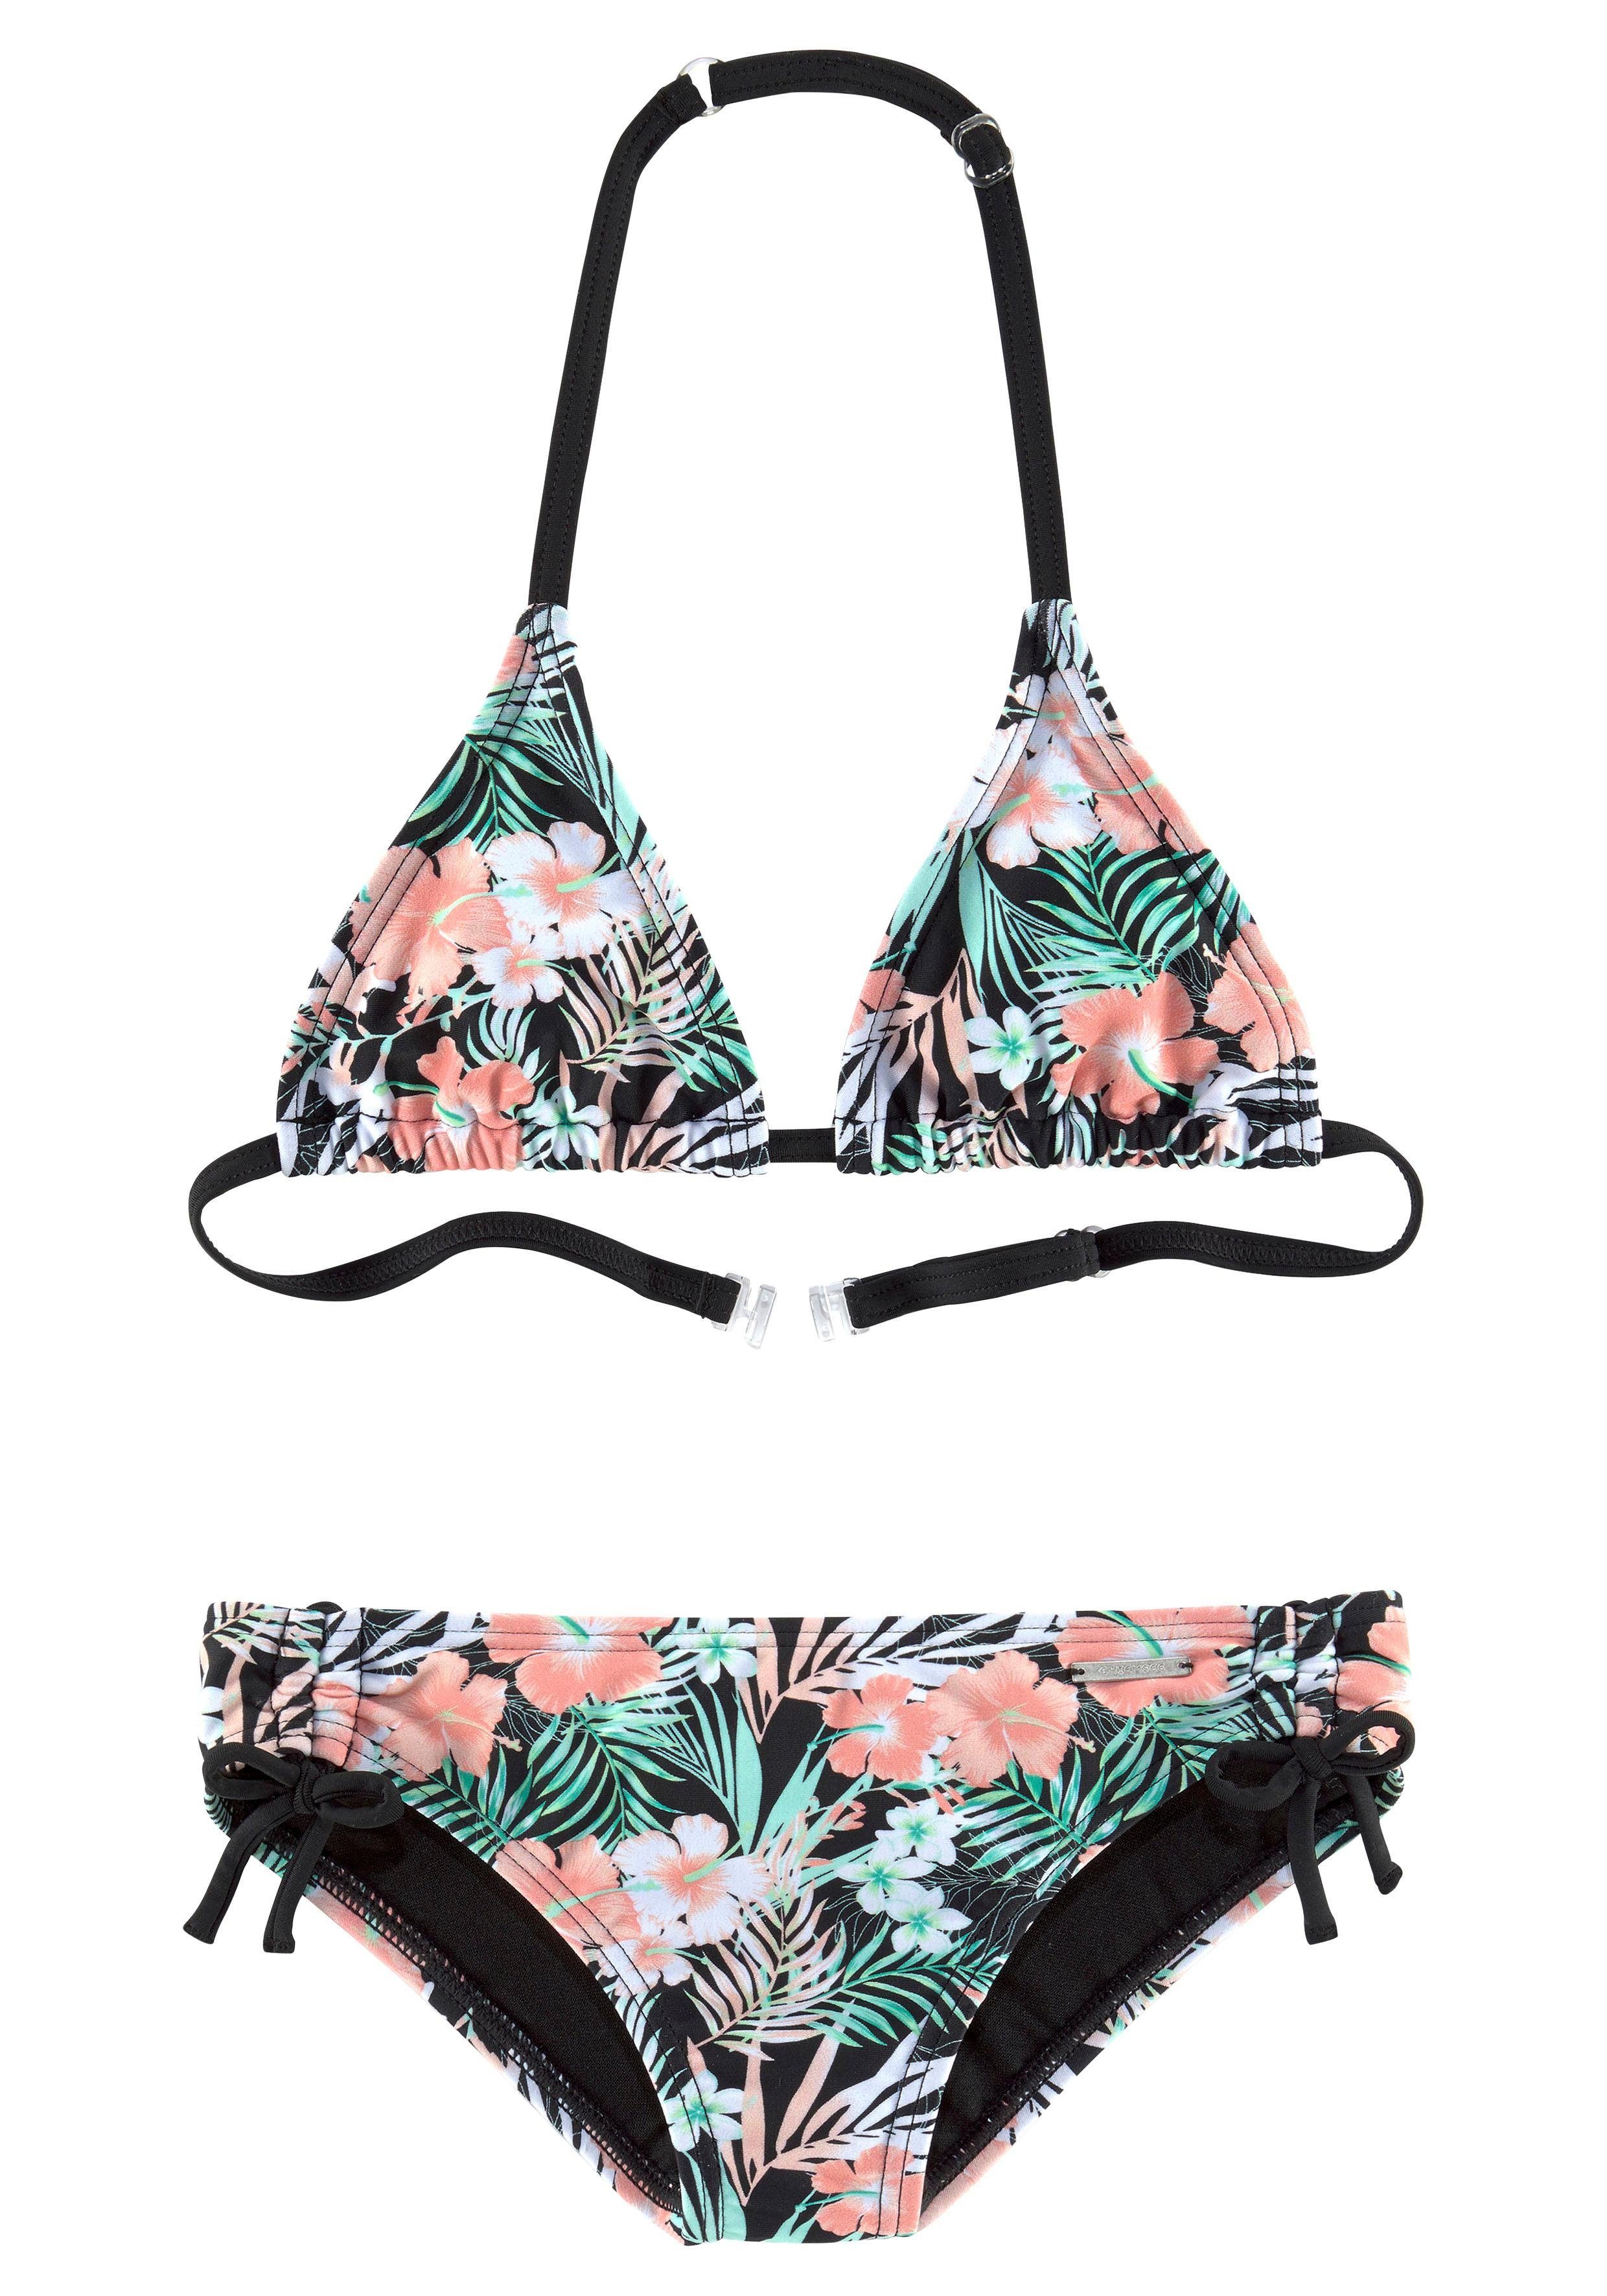 Chiemsee floralem Triangel-Bikini mit Design